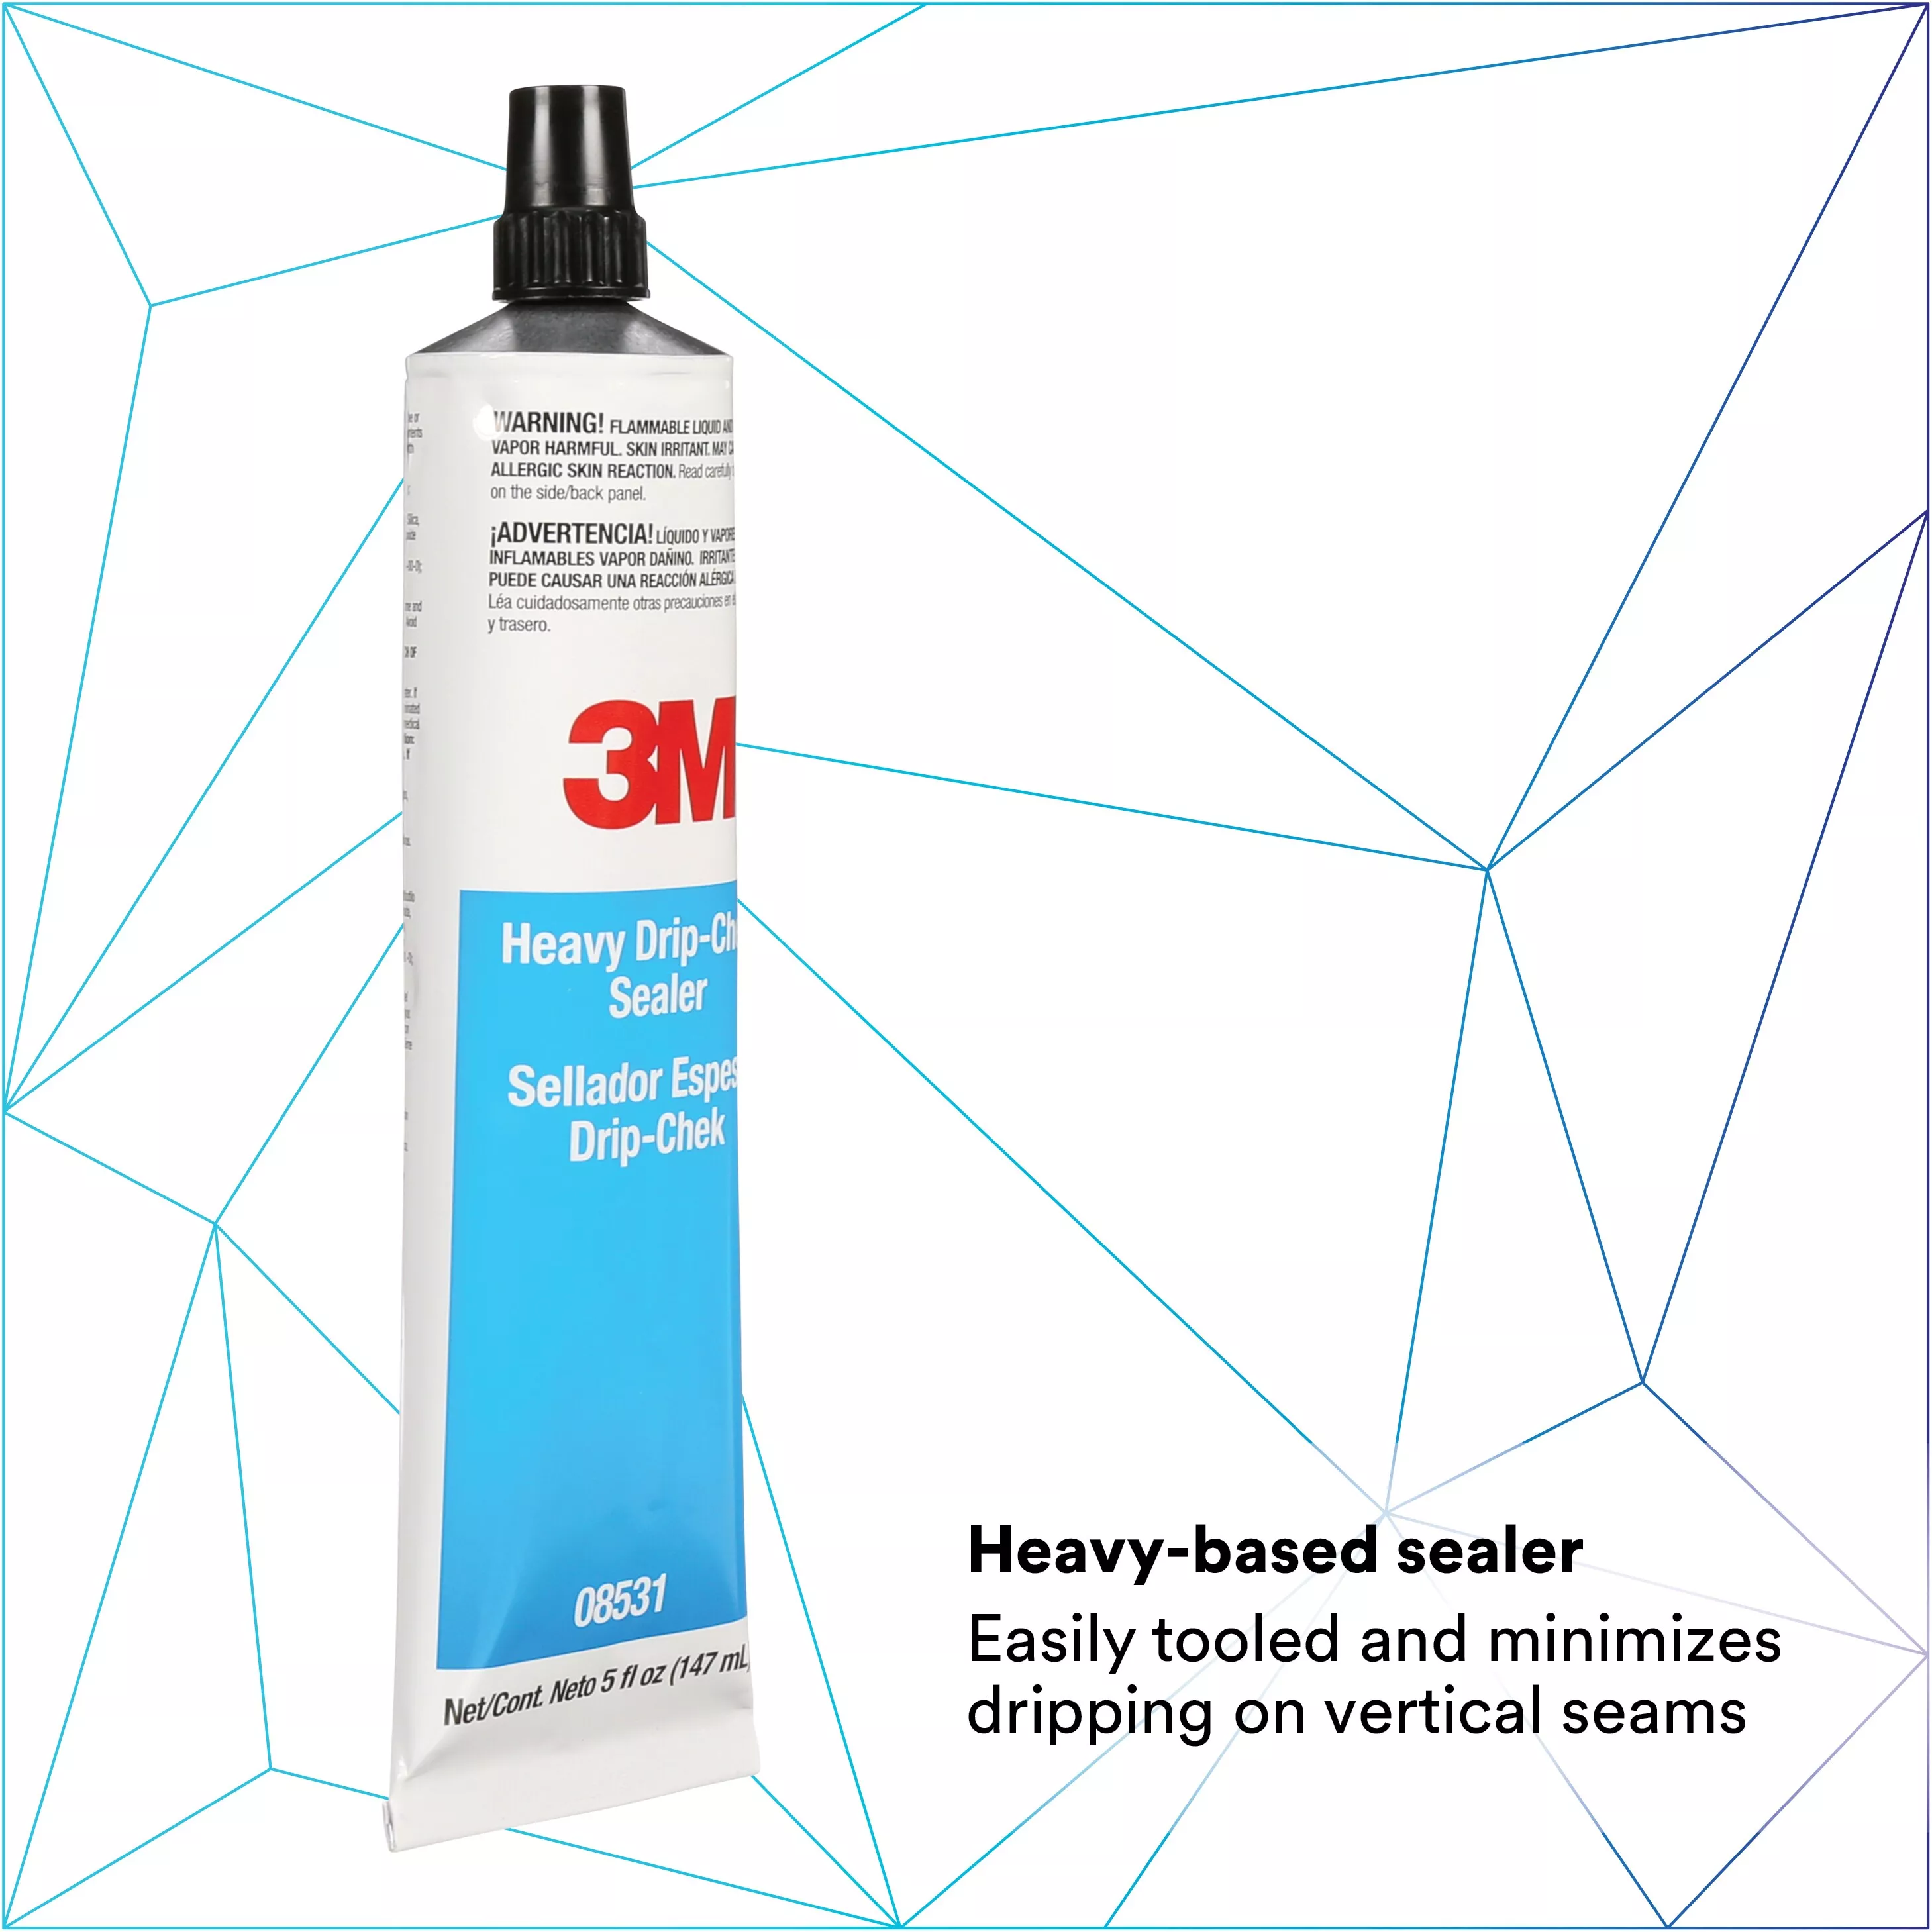 SKU 7000028386 | 3M™ Heavy Drip-Chek™ Sealer